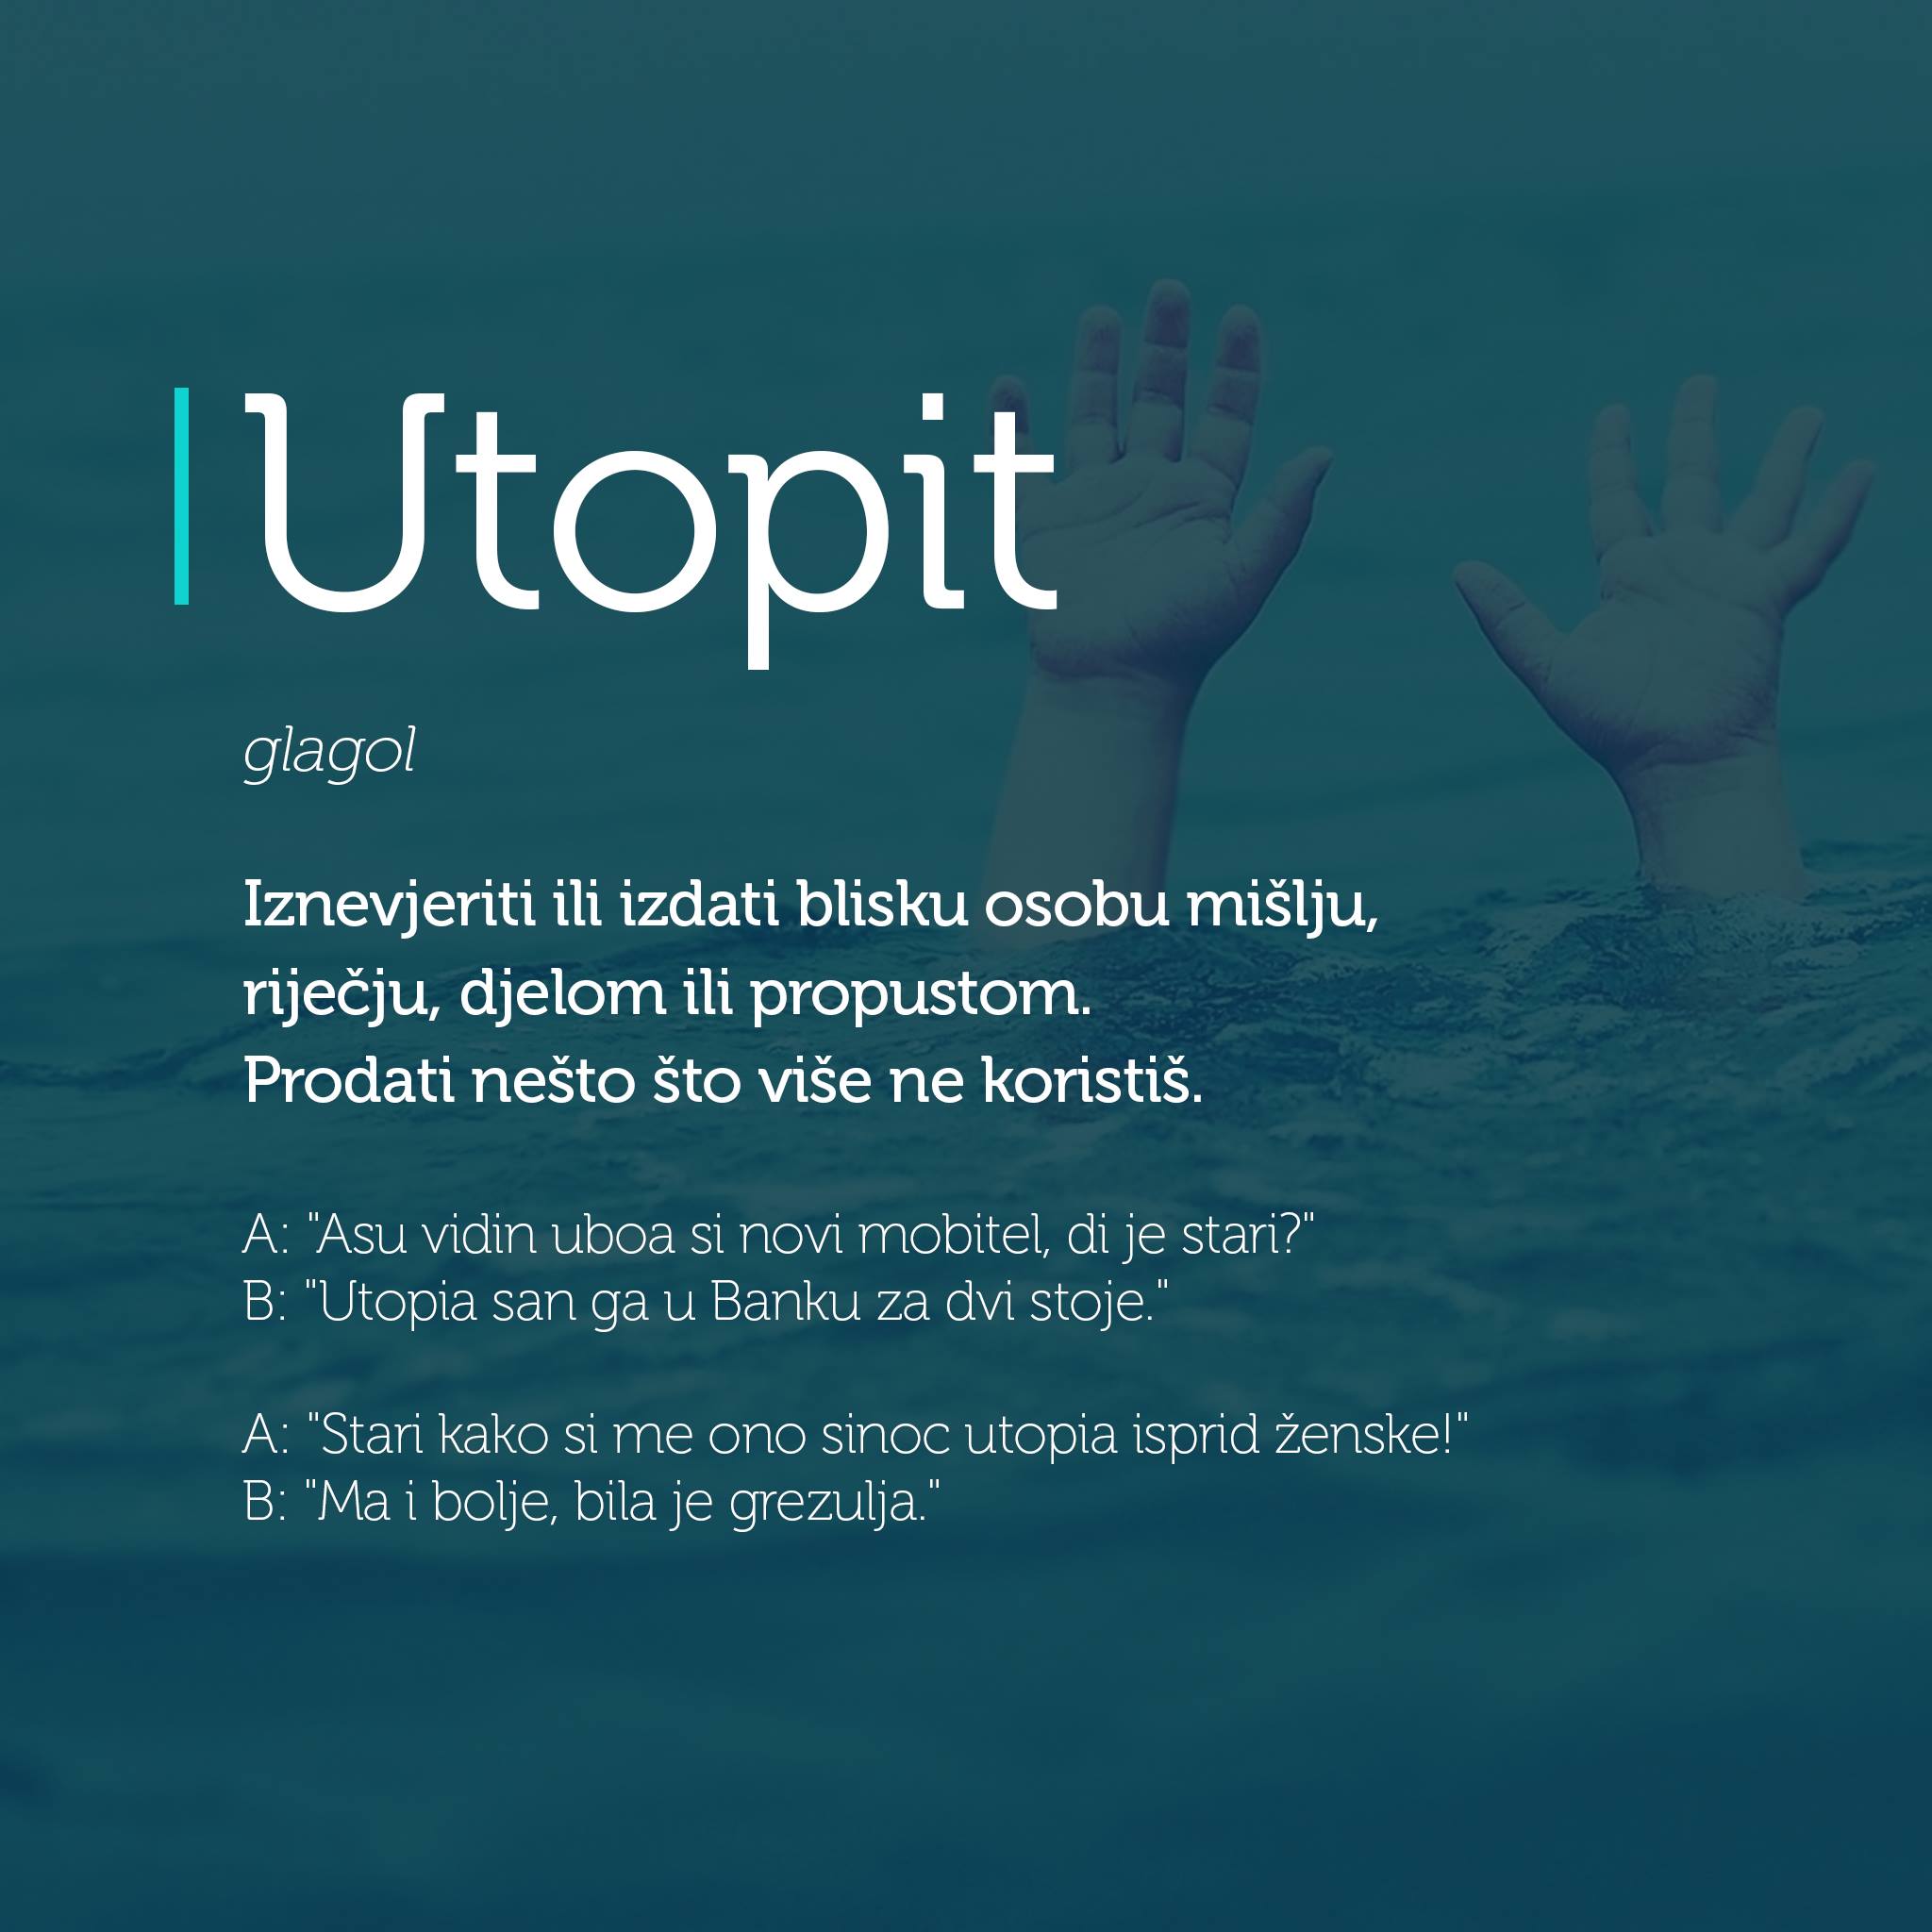 Utopit